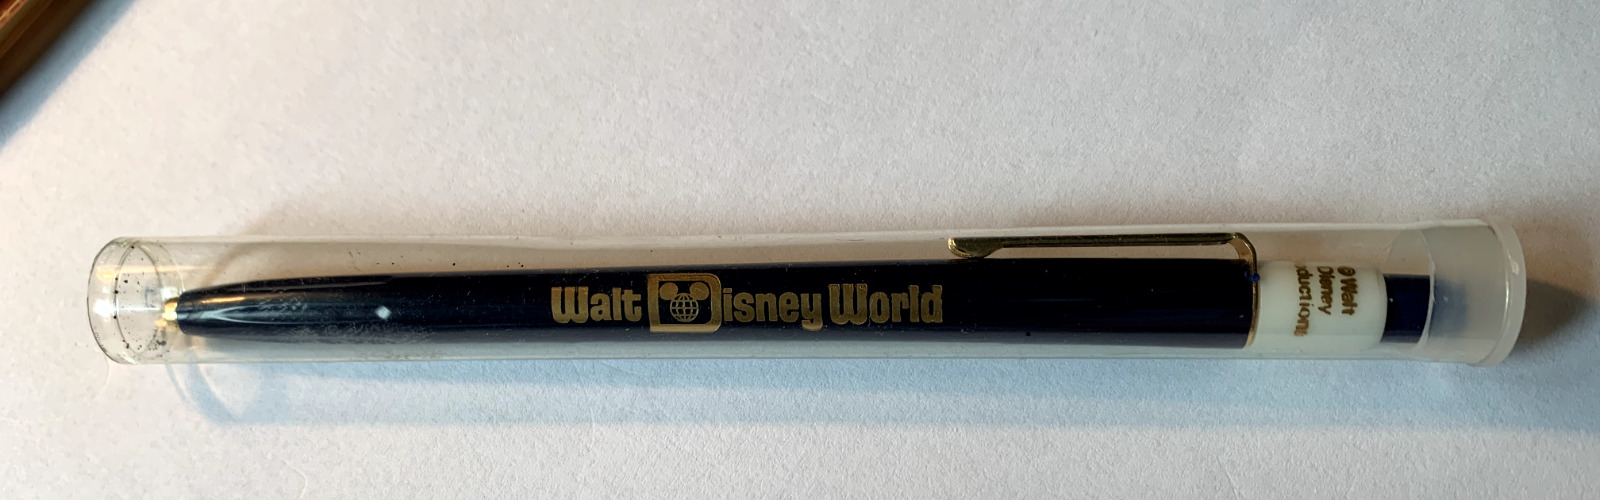 Vintage Walt Disney World Productions Pen in Packaging